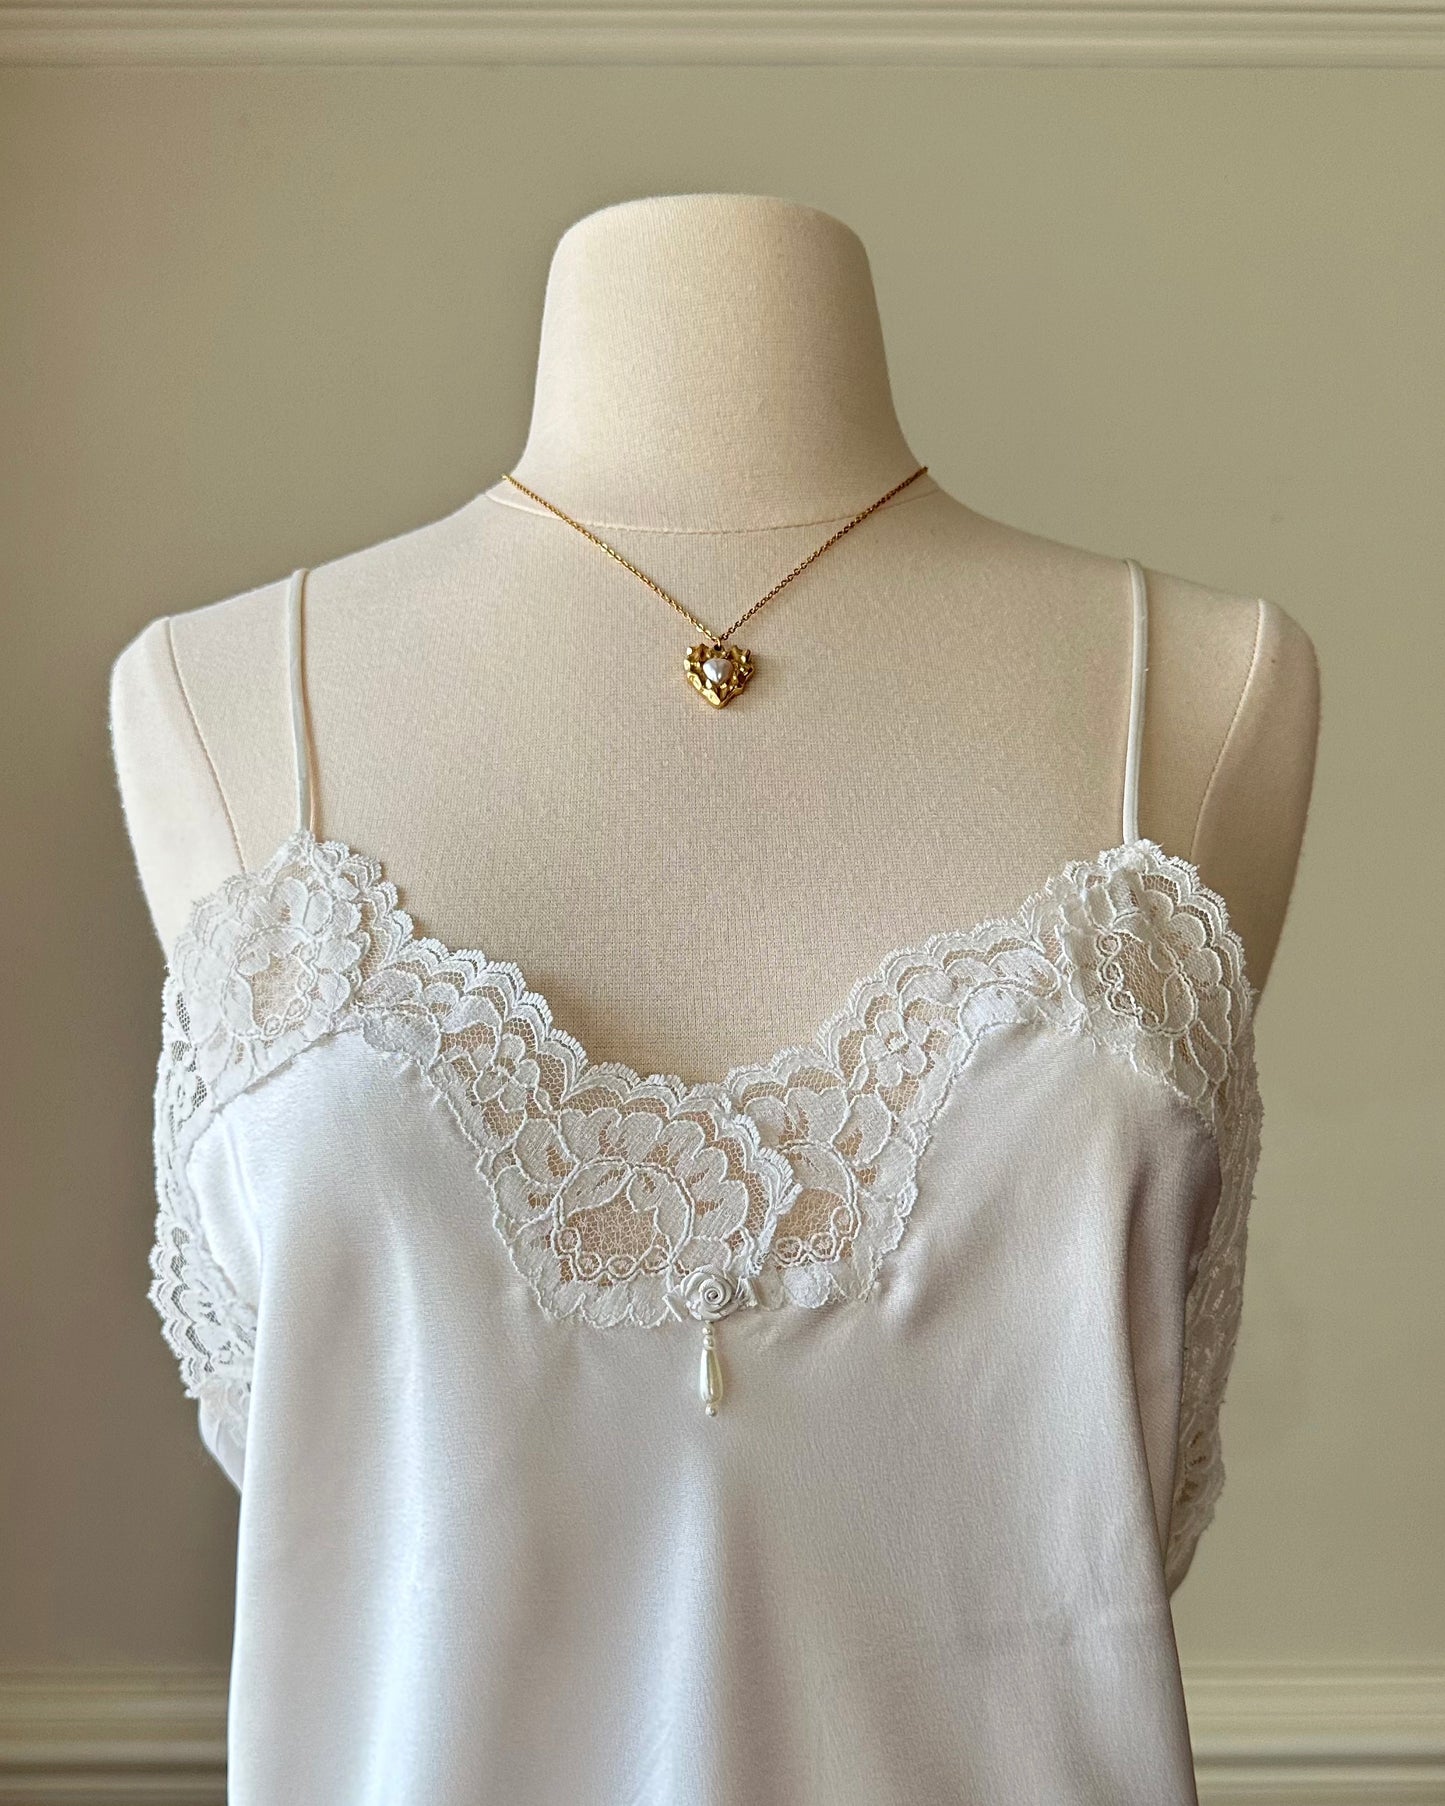 Vintage Pearl White Slip Dress featuring Beautiful Mermaid Tail Skirt